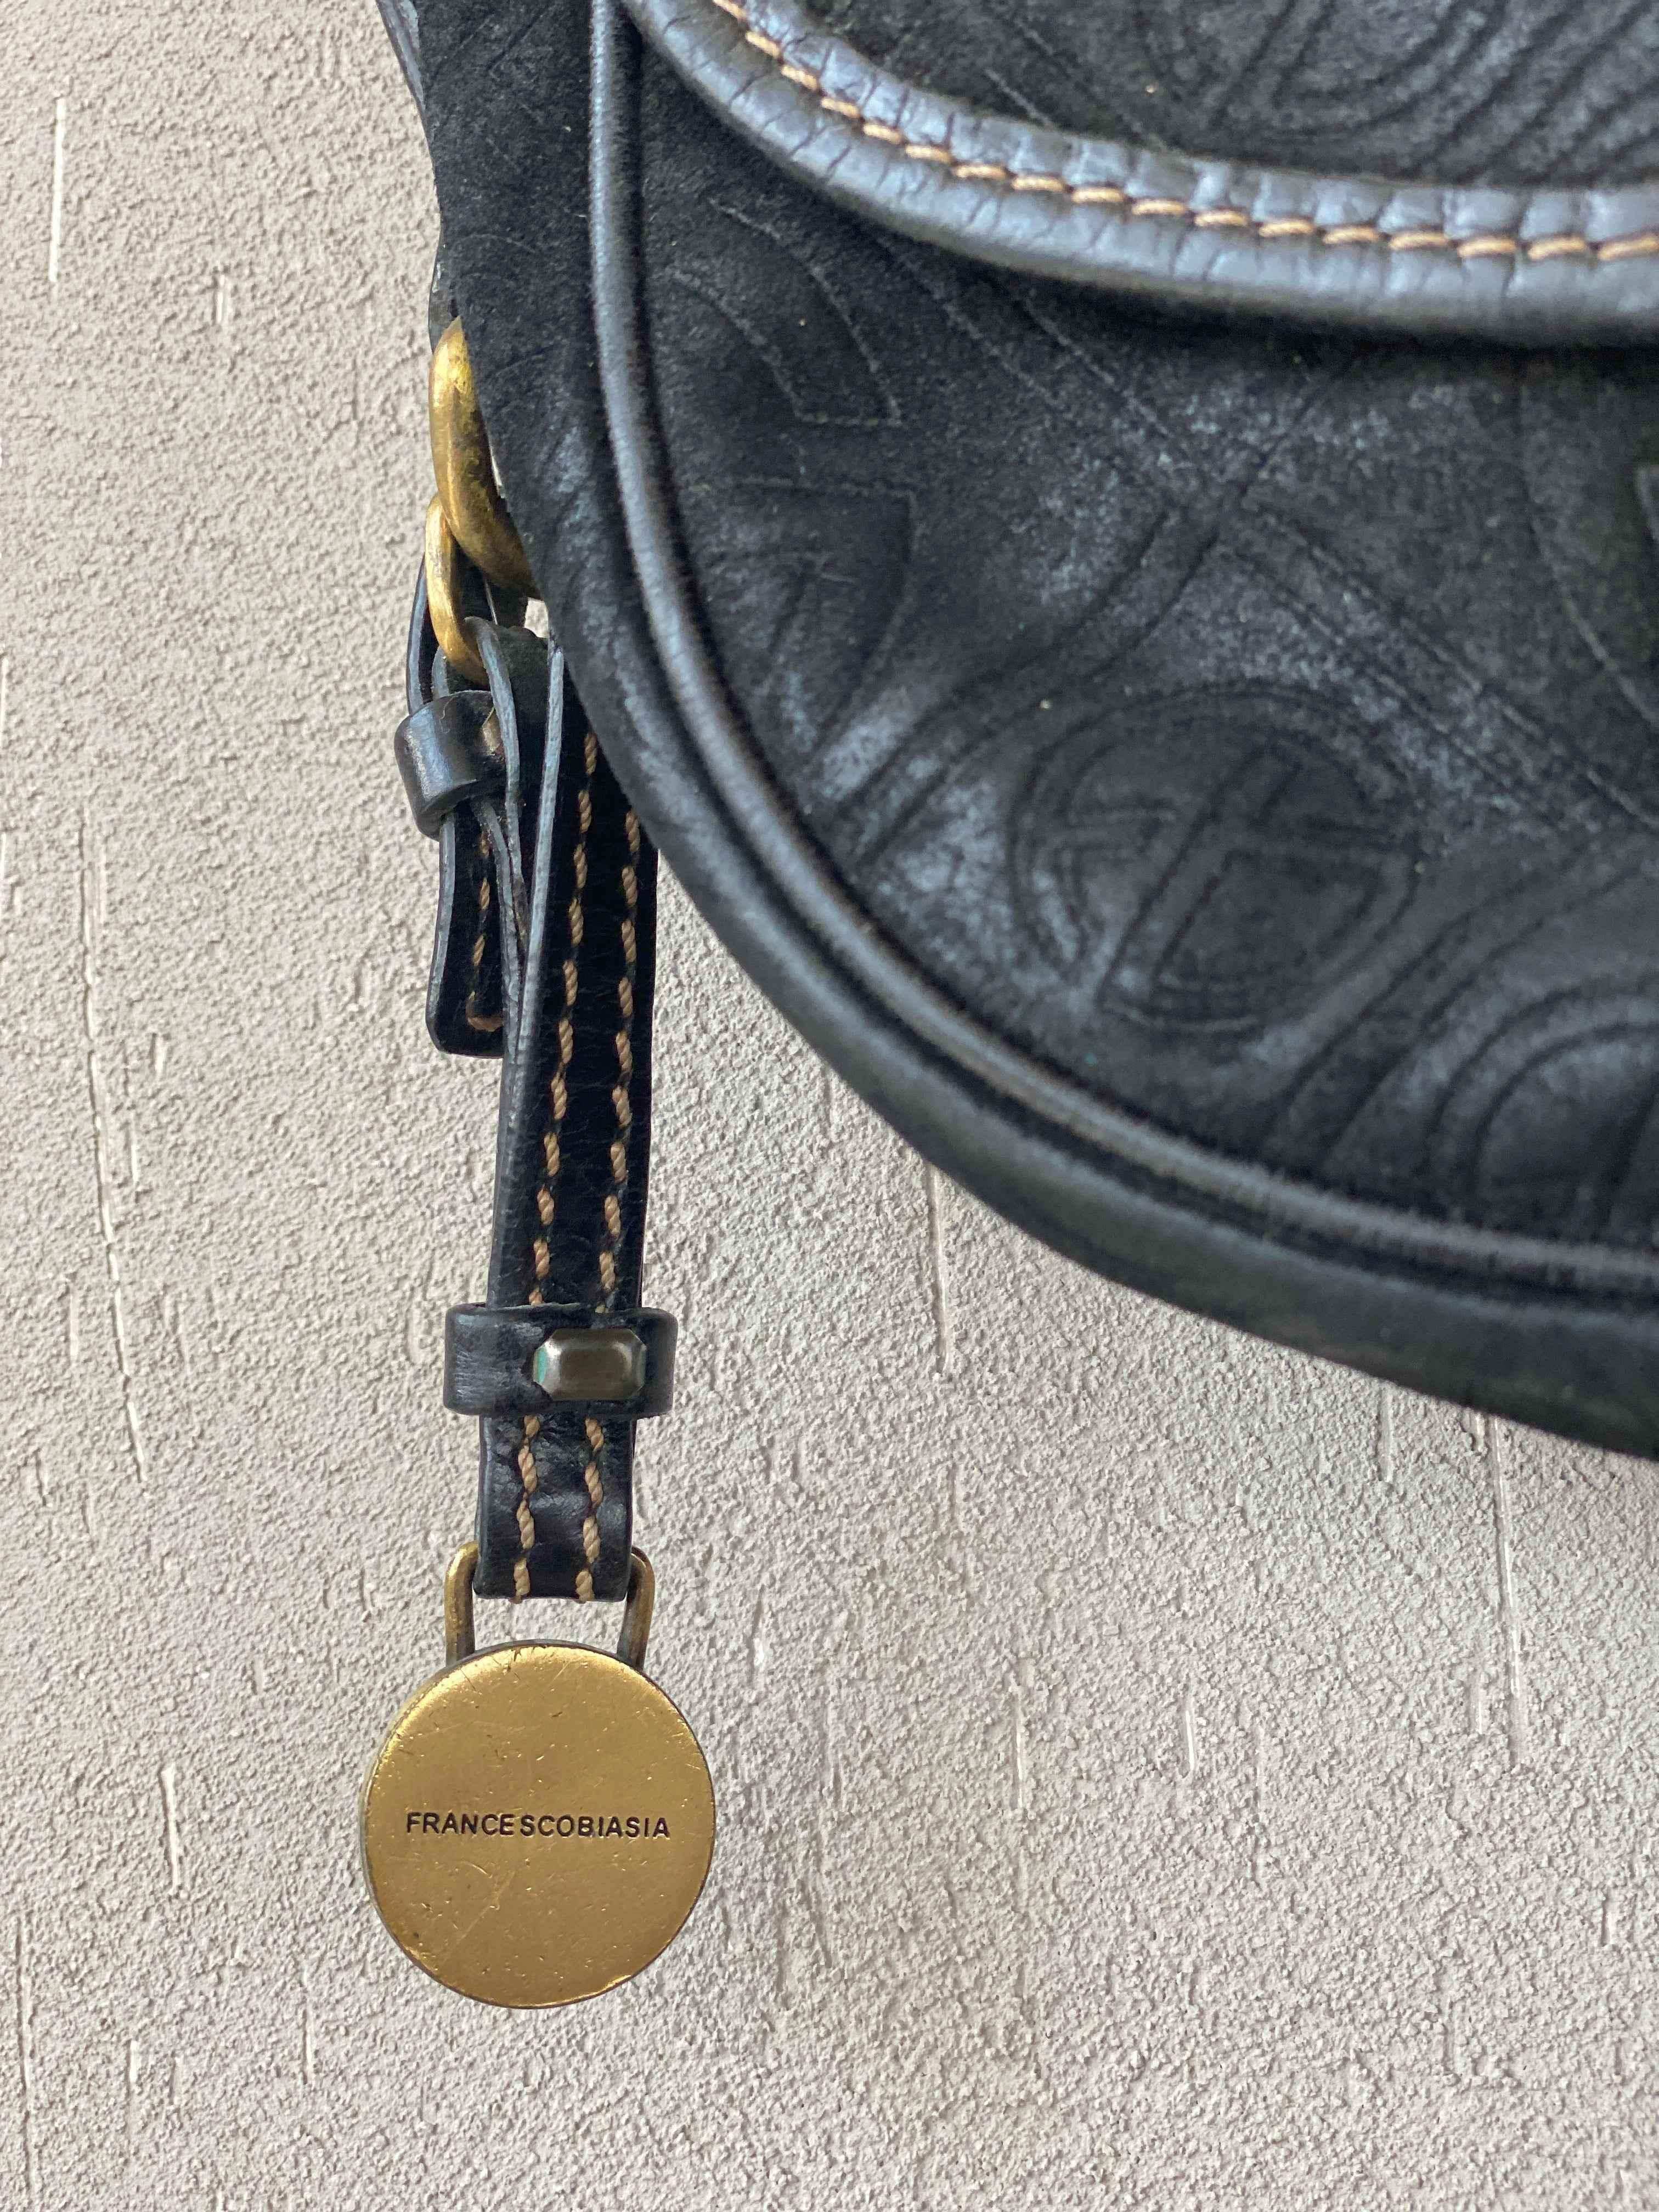 new) francesco biasia handbag | eBay